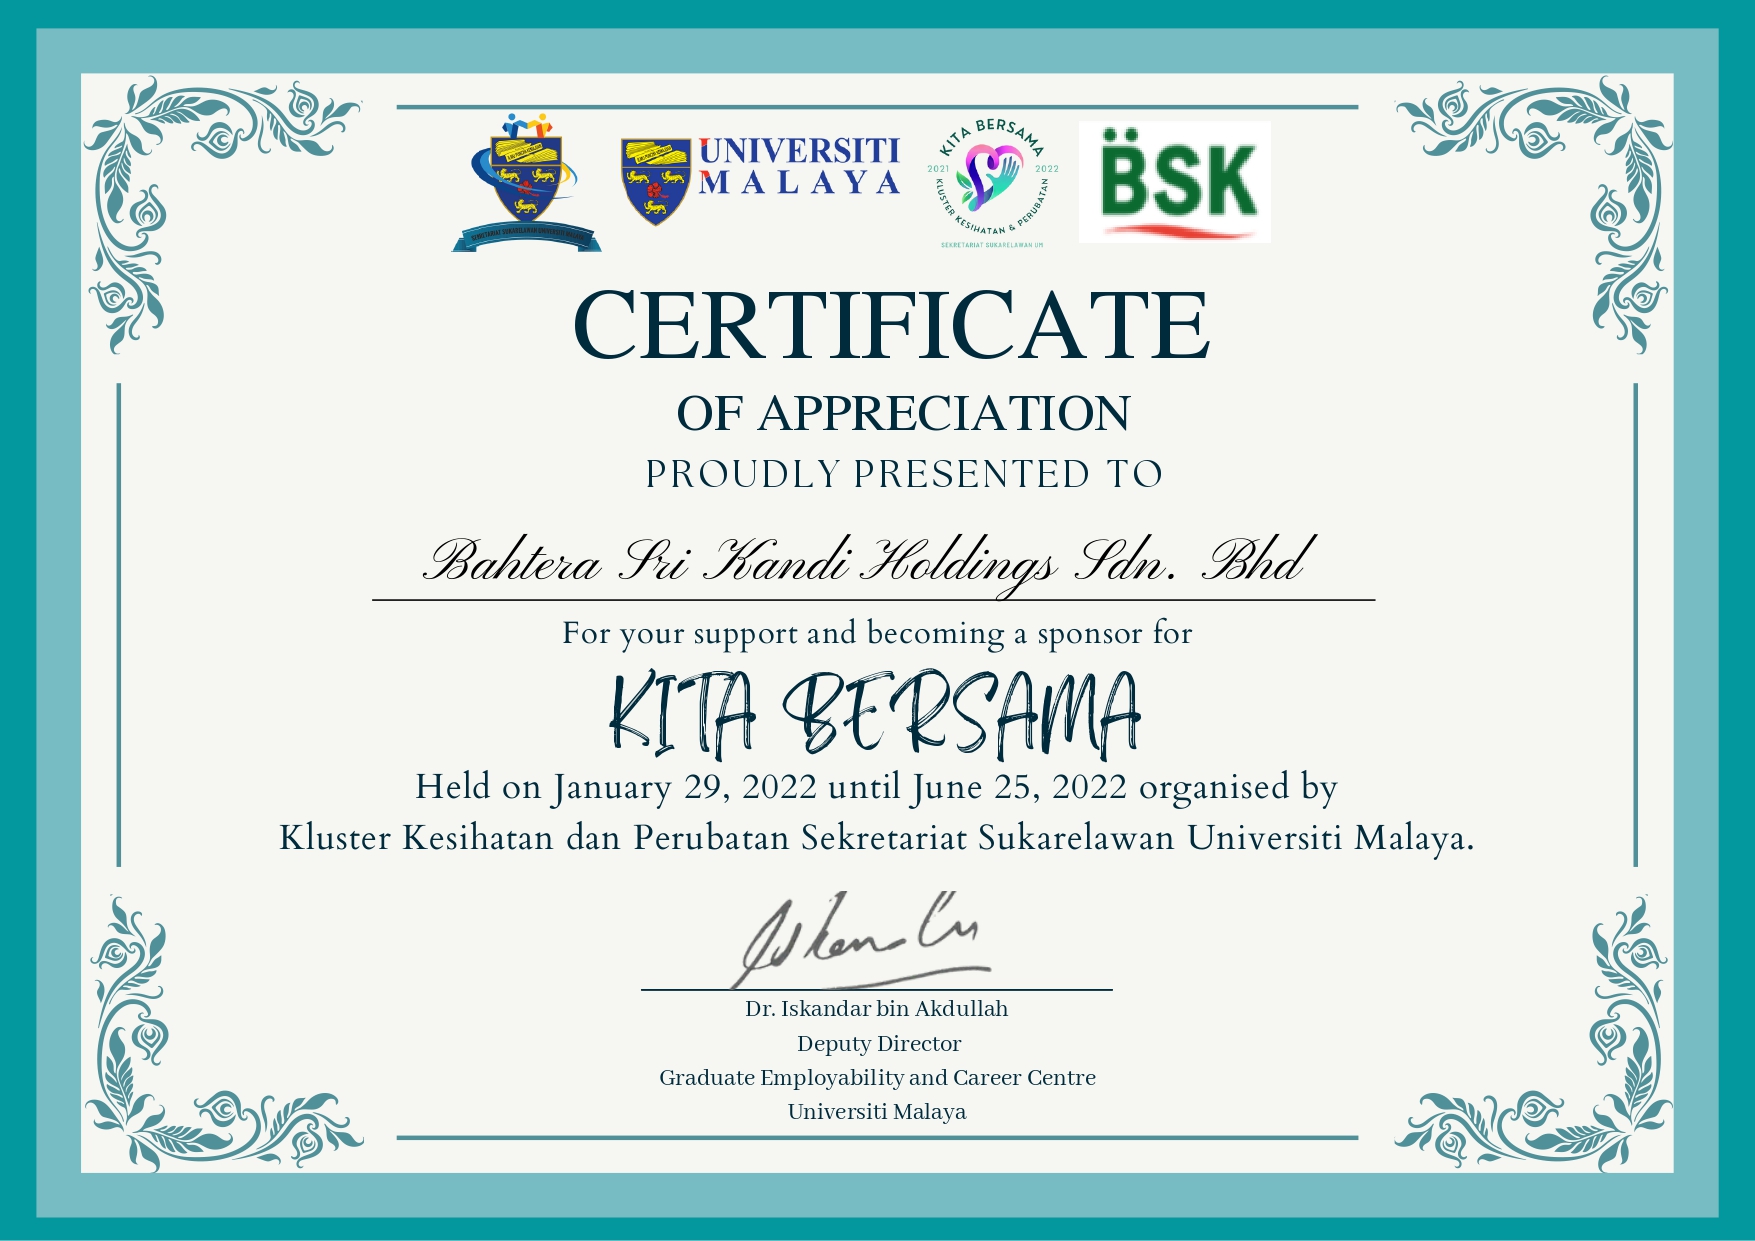 Certificate of Appreciation from Universiti Malaya